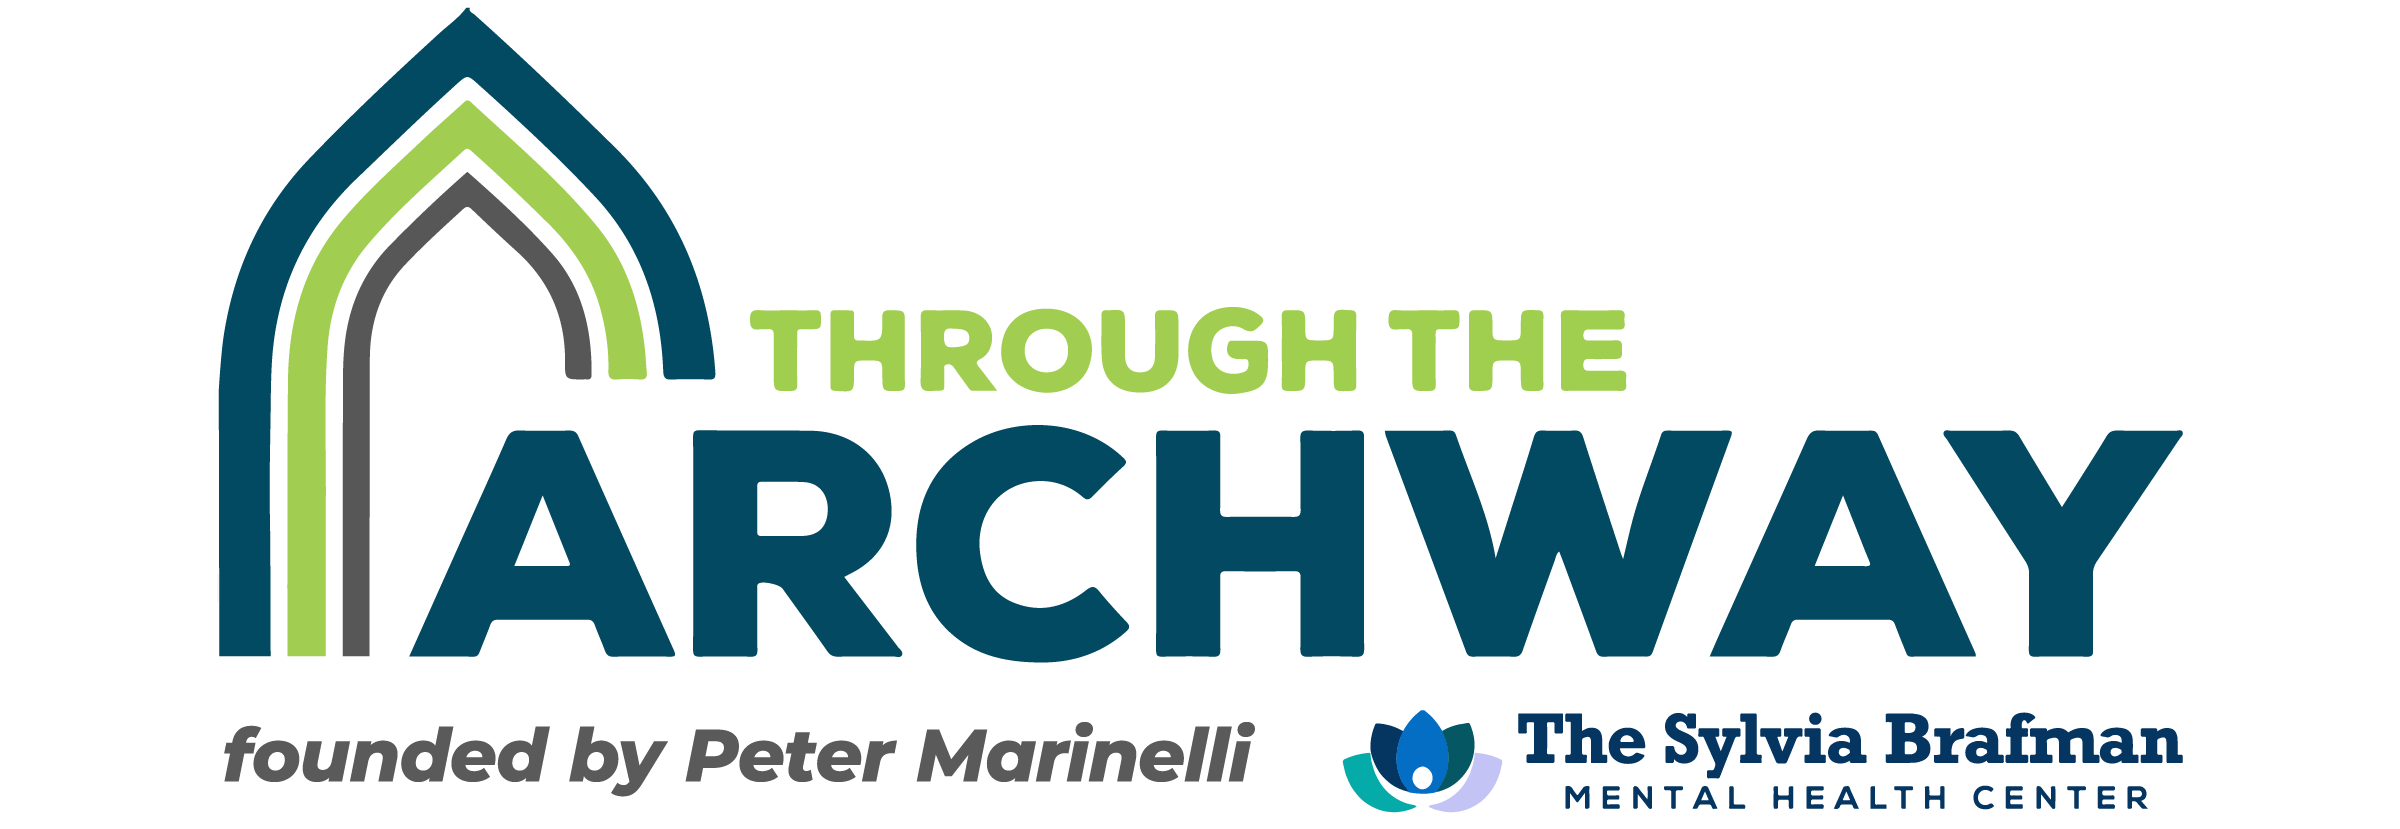 Through The Archway Mental Health Center Logo